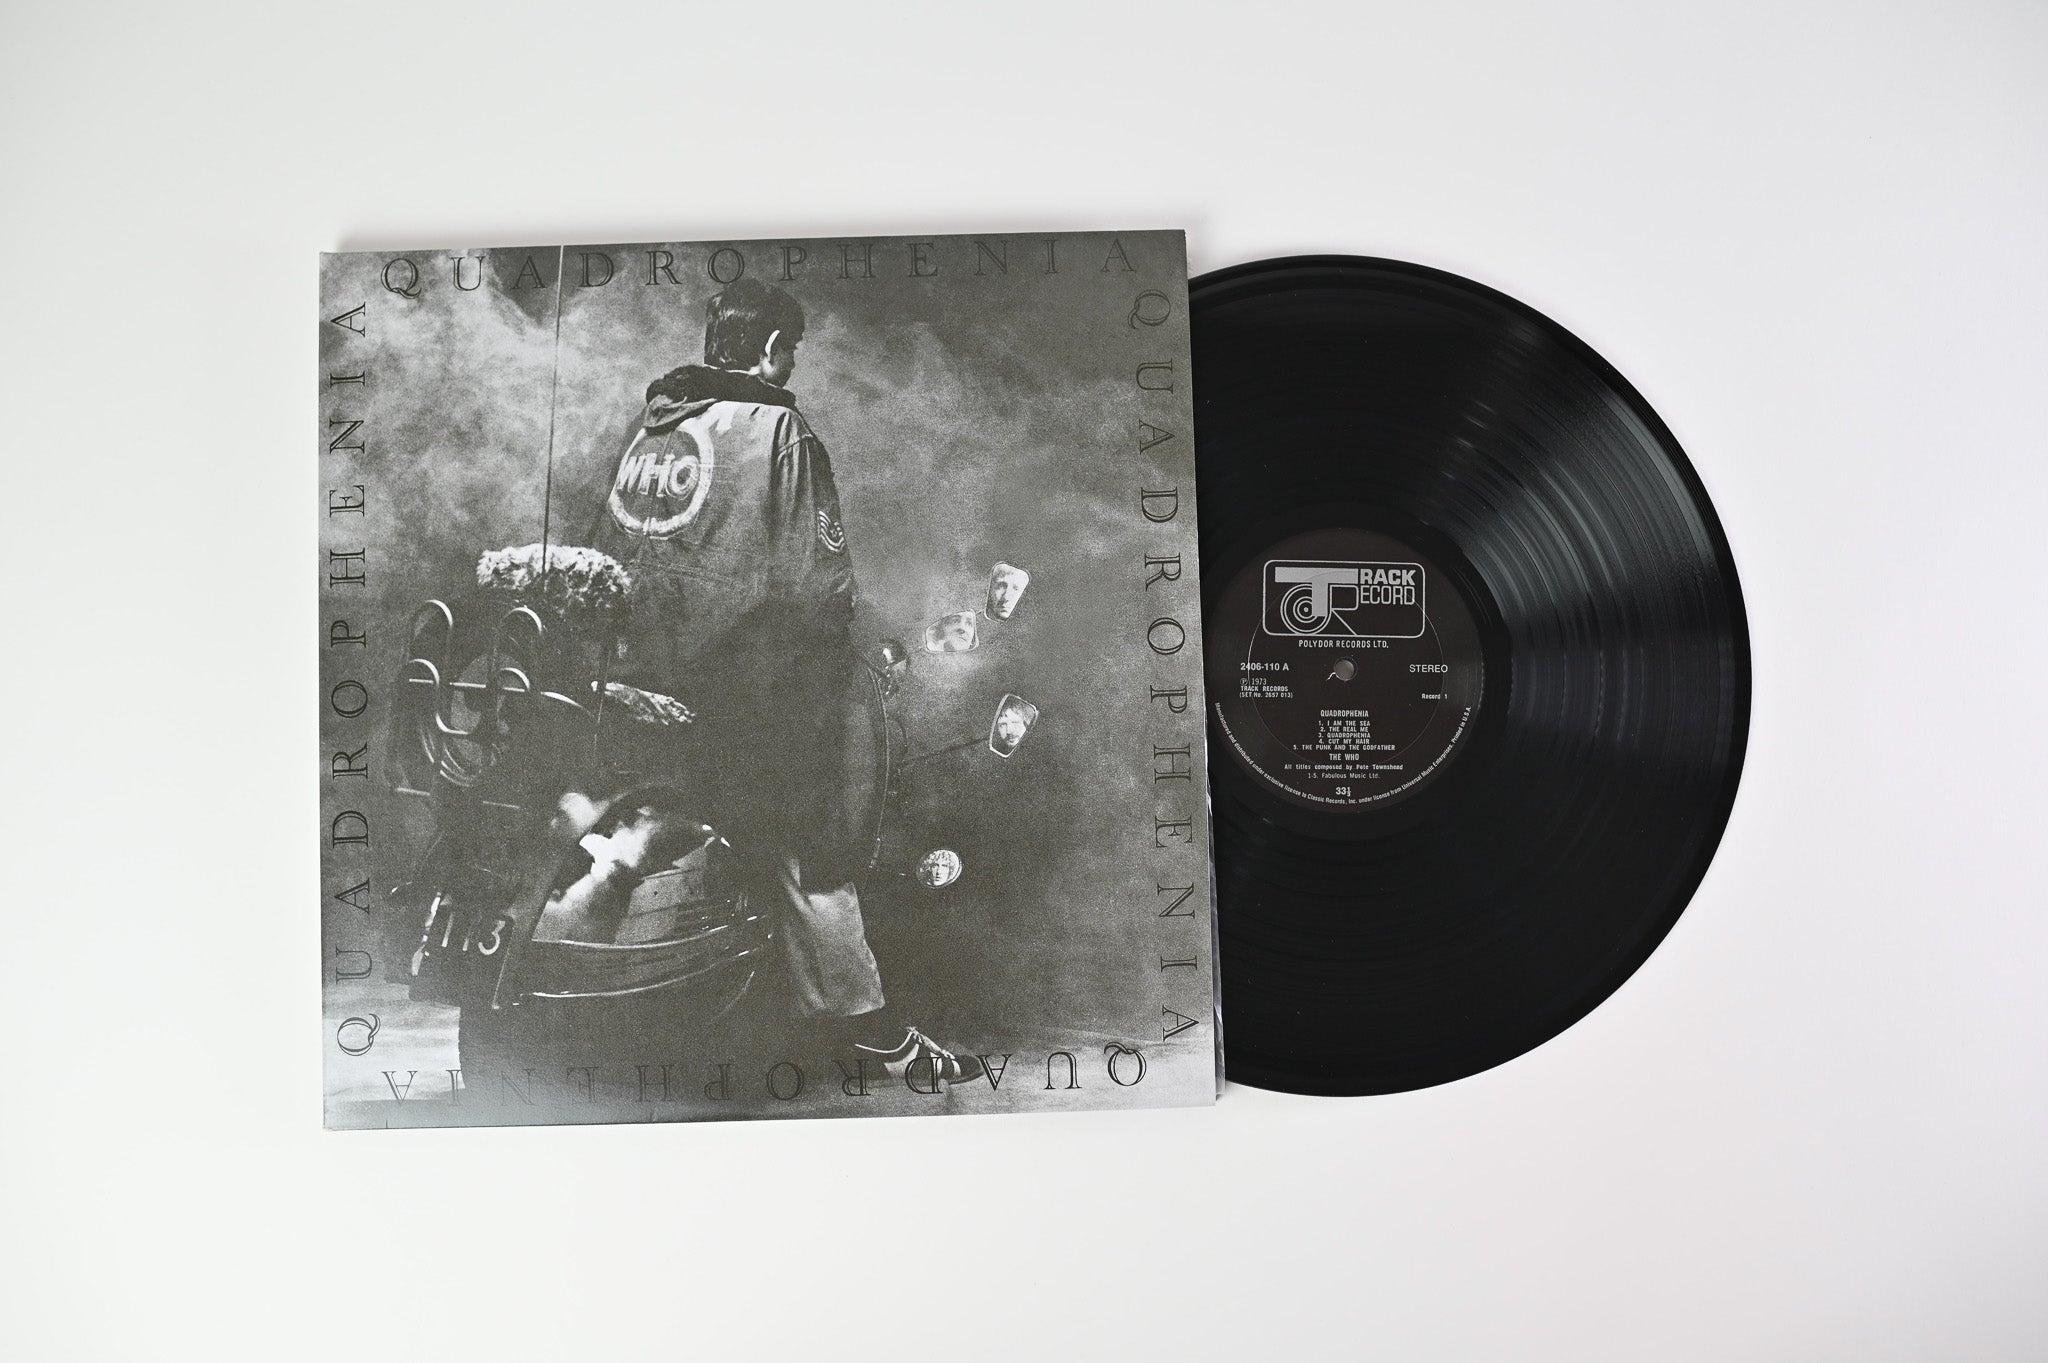 The Who - Quadrophenia on Classic Records/Track Records Reissue 200g Quiex SV-P